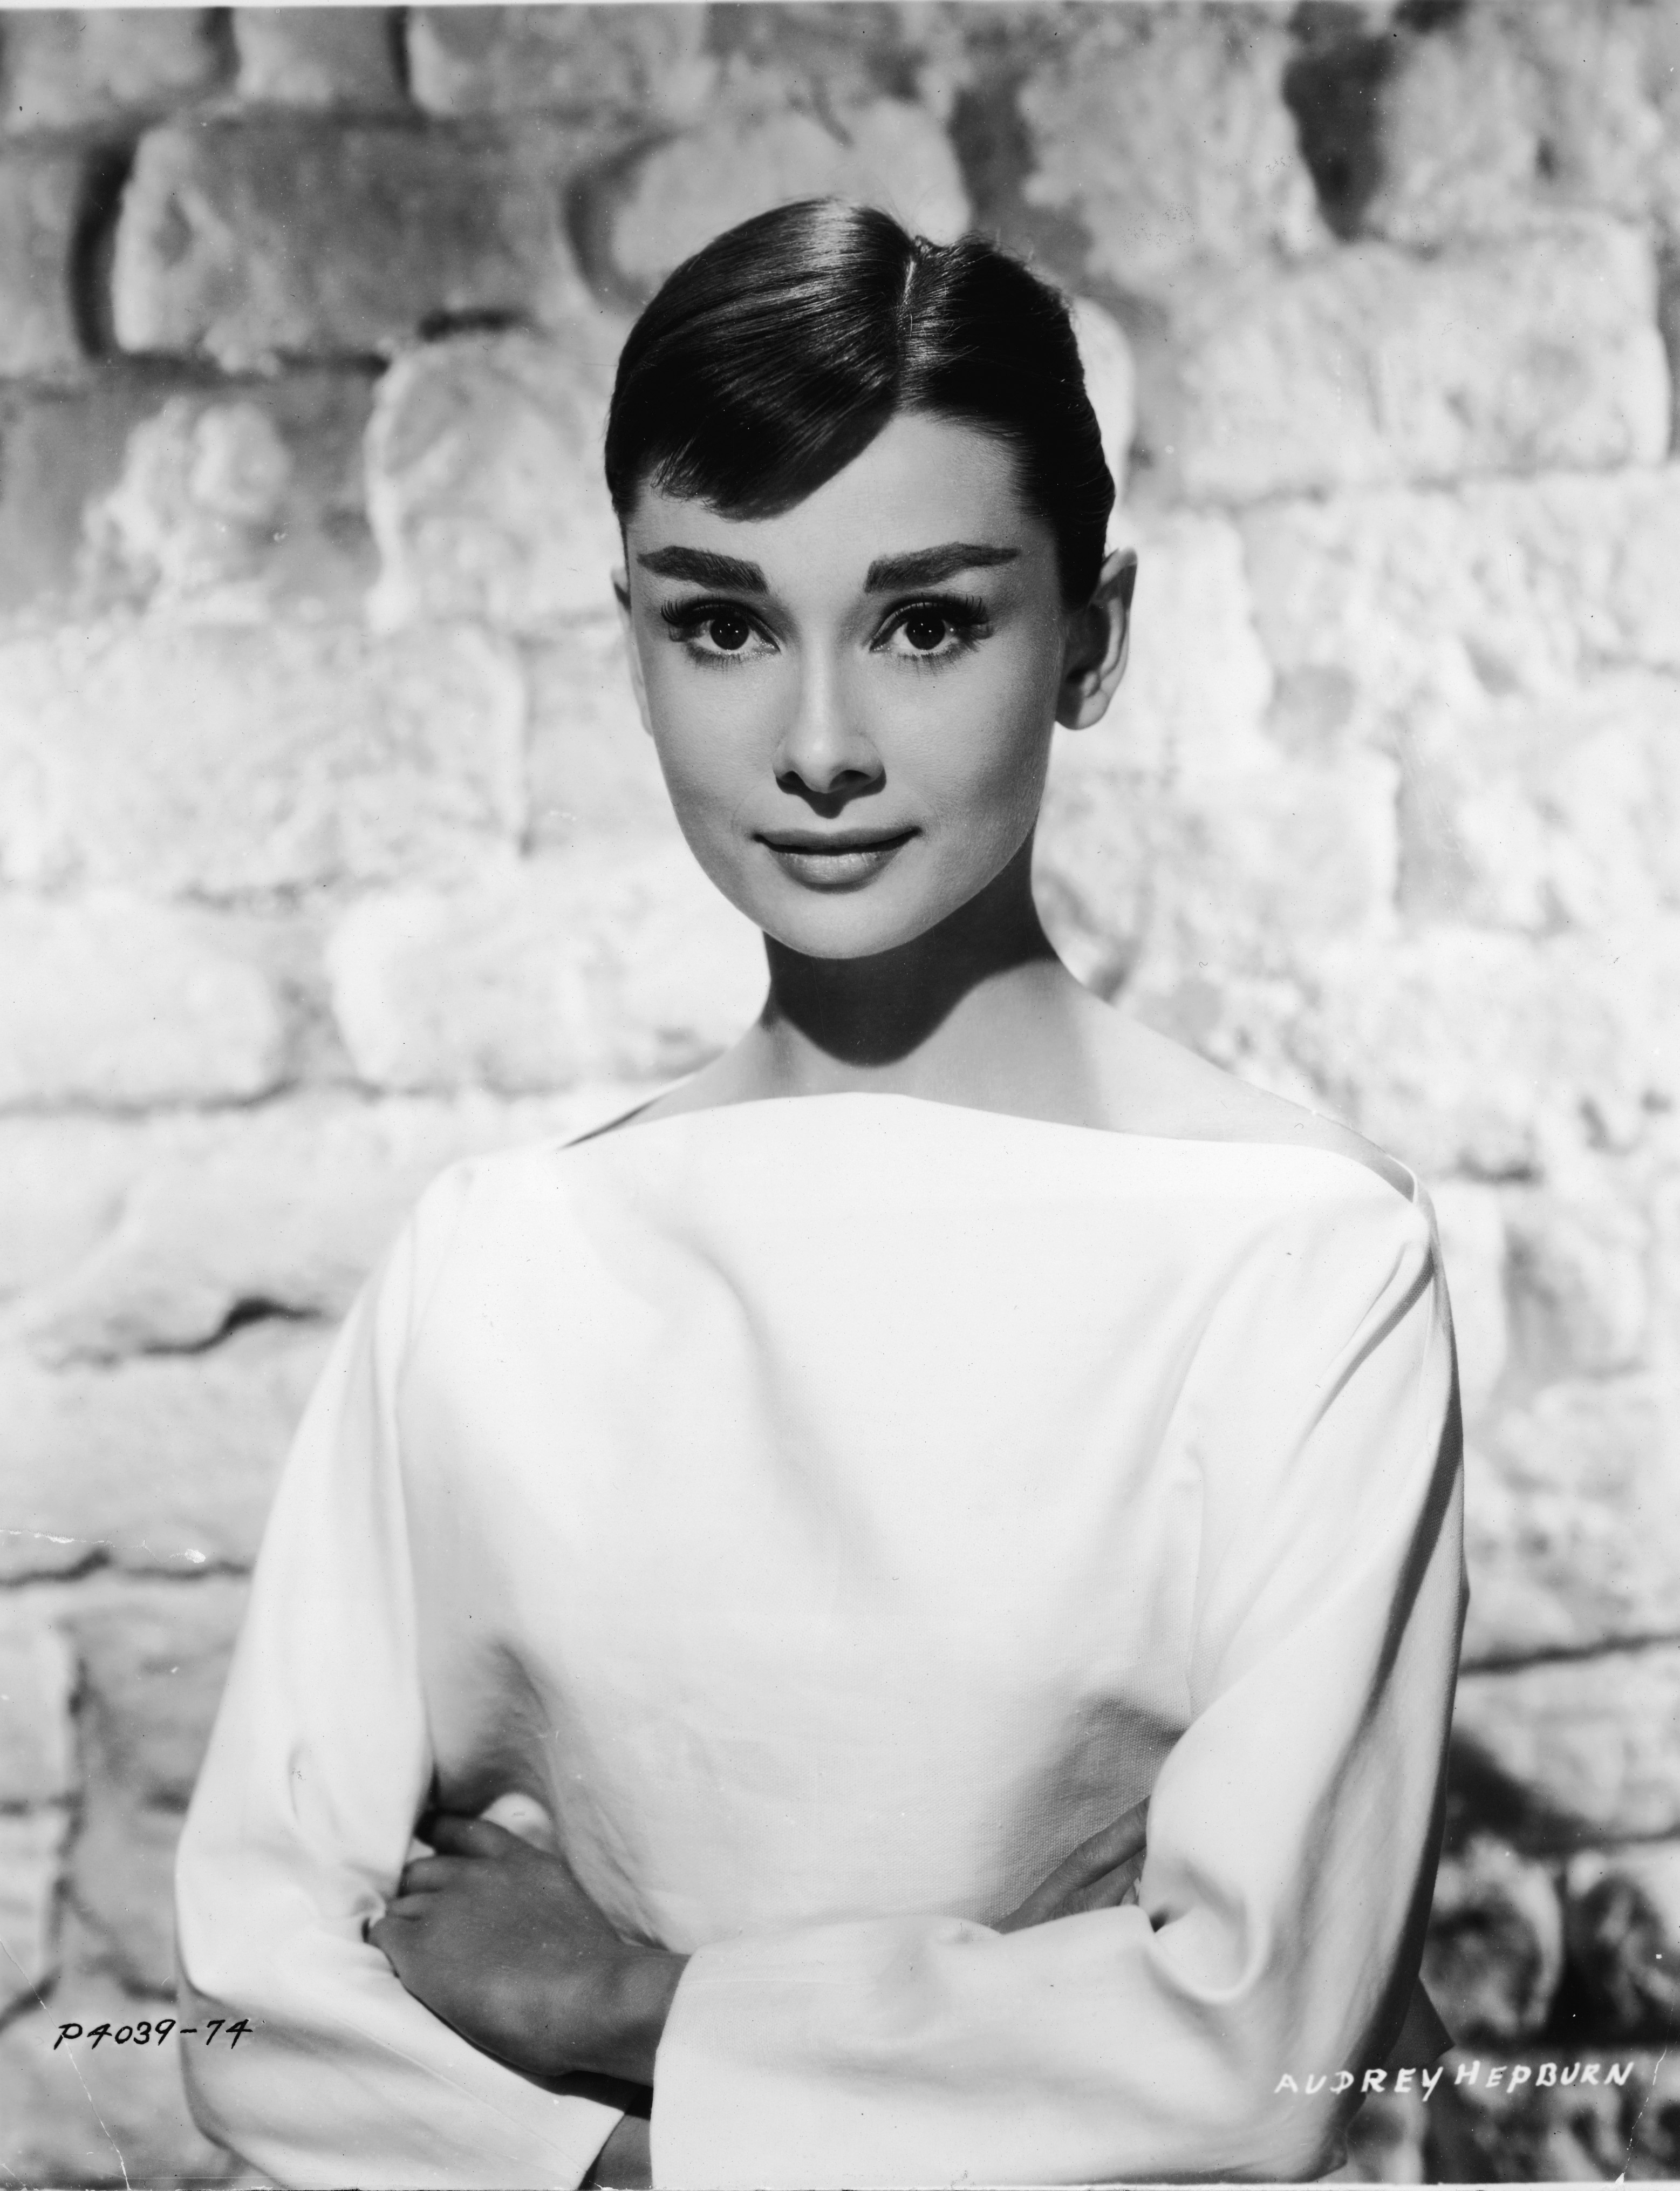 Audrey Hepburn (Image: Getty Images)